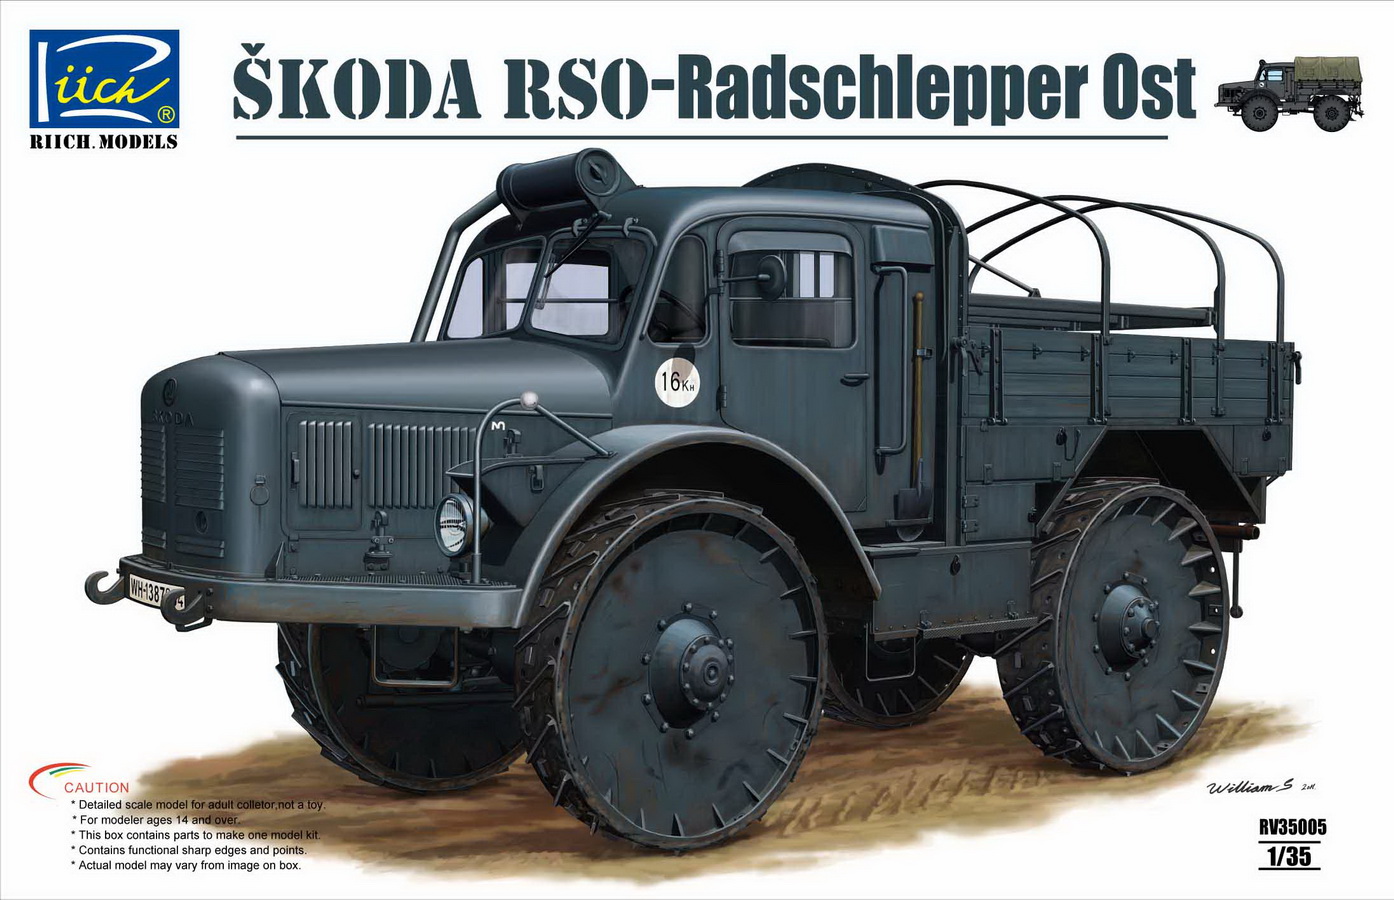 RV35005  техника и вооружение  Skoda RSO-Radschlepper Ost  (1:35)